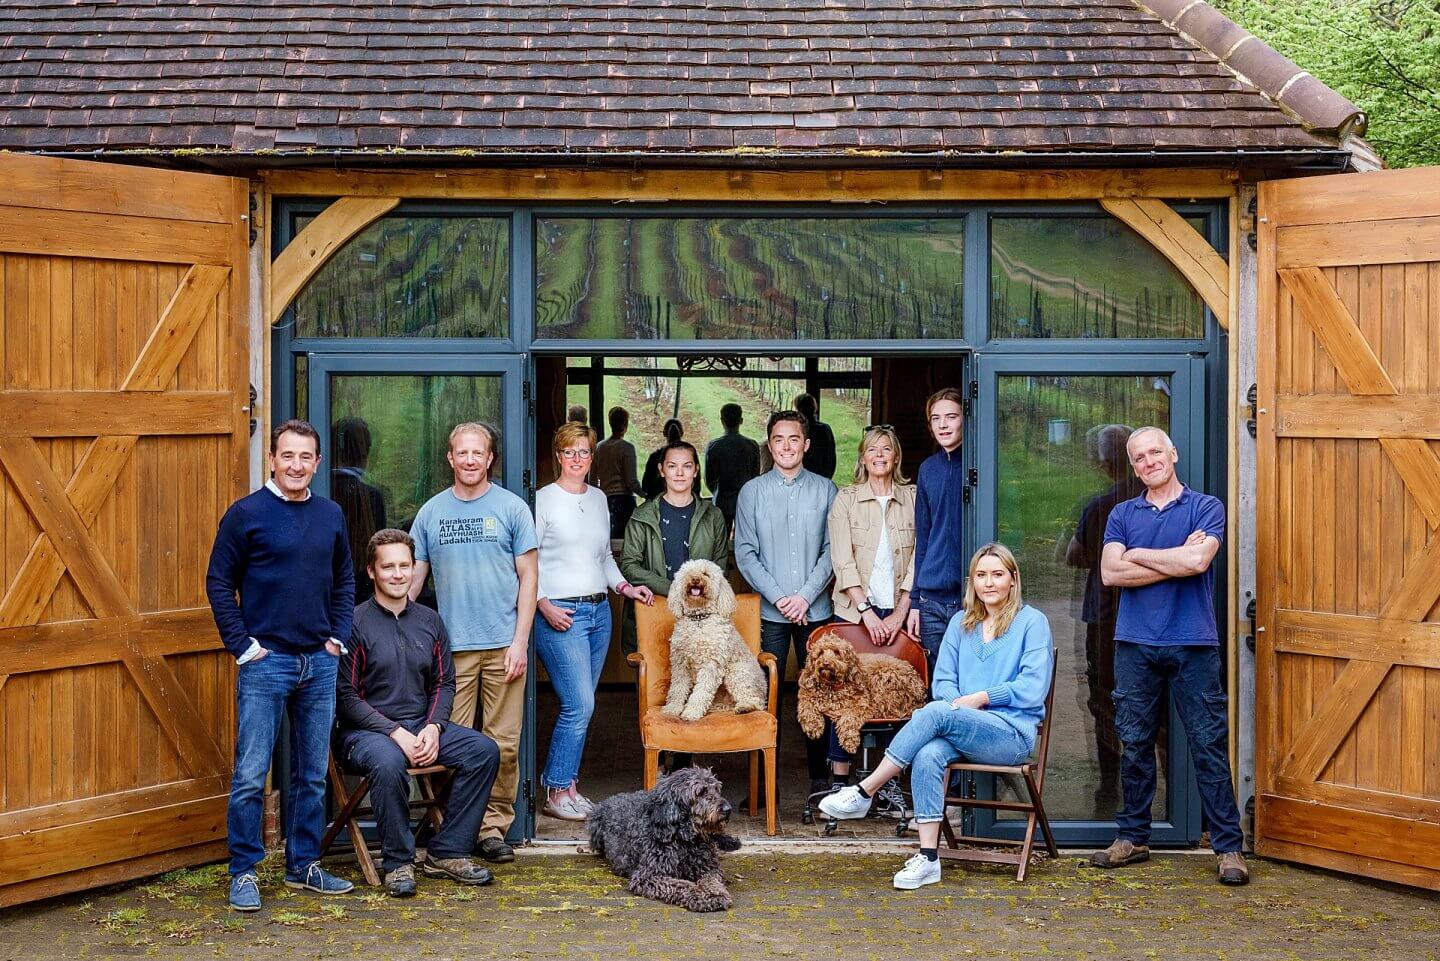 the Chilworth Manor vineyard team group photograph